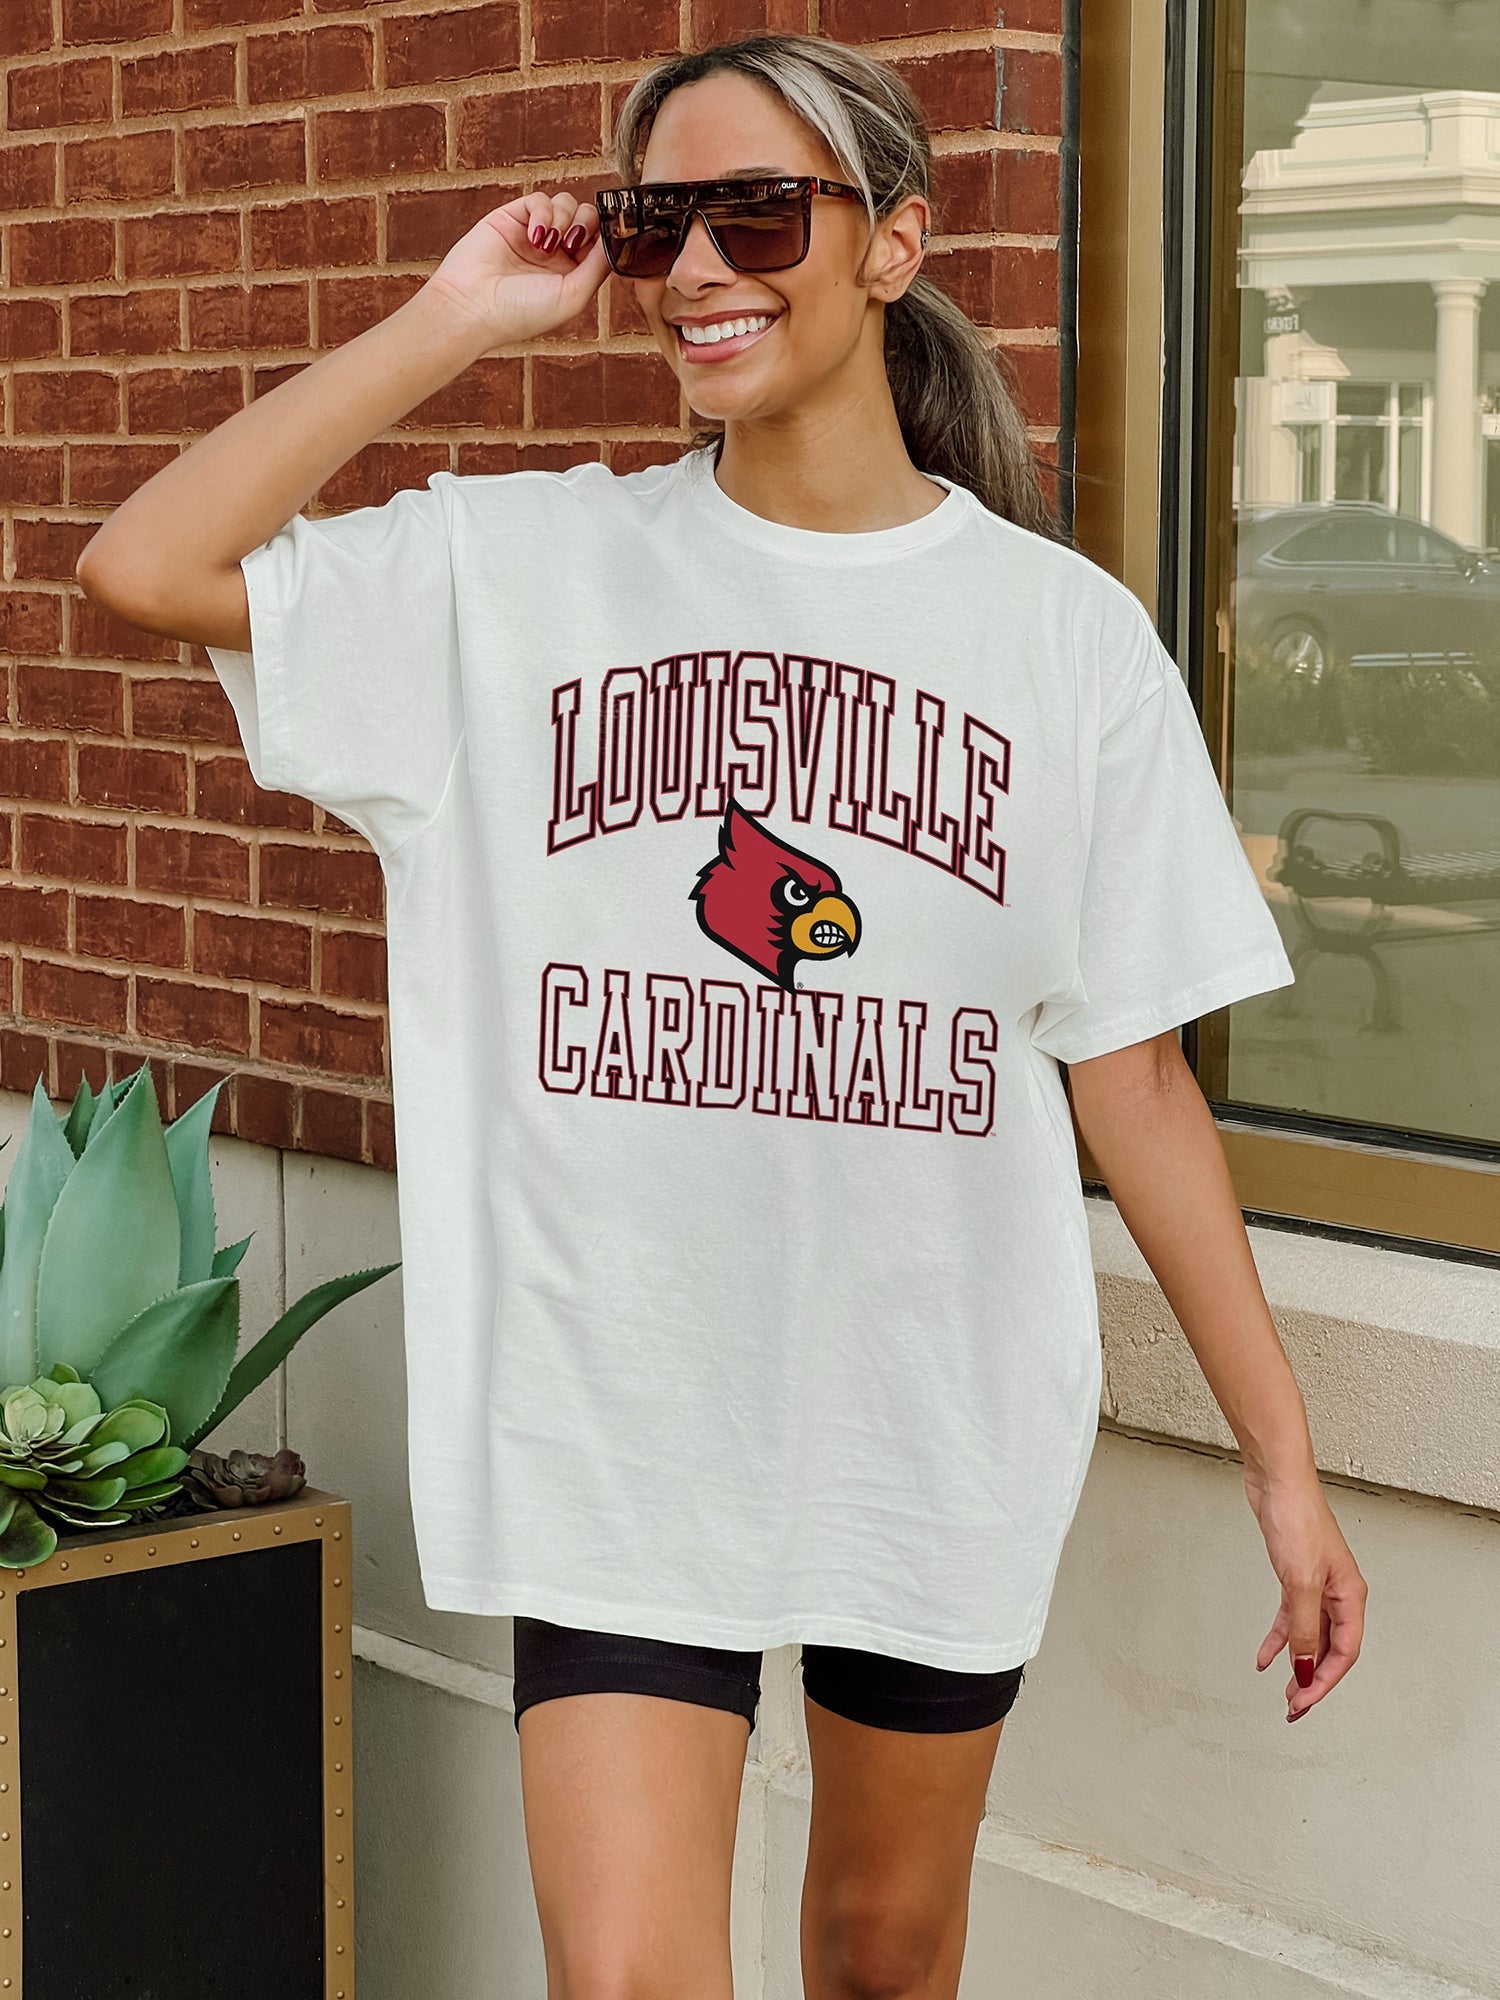 Ladies Louisville Crew Sweatshirt, Louisville Cardinals Crewnecks